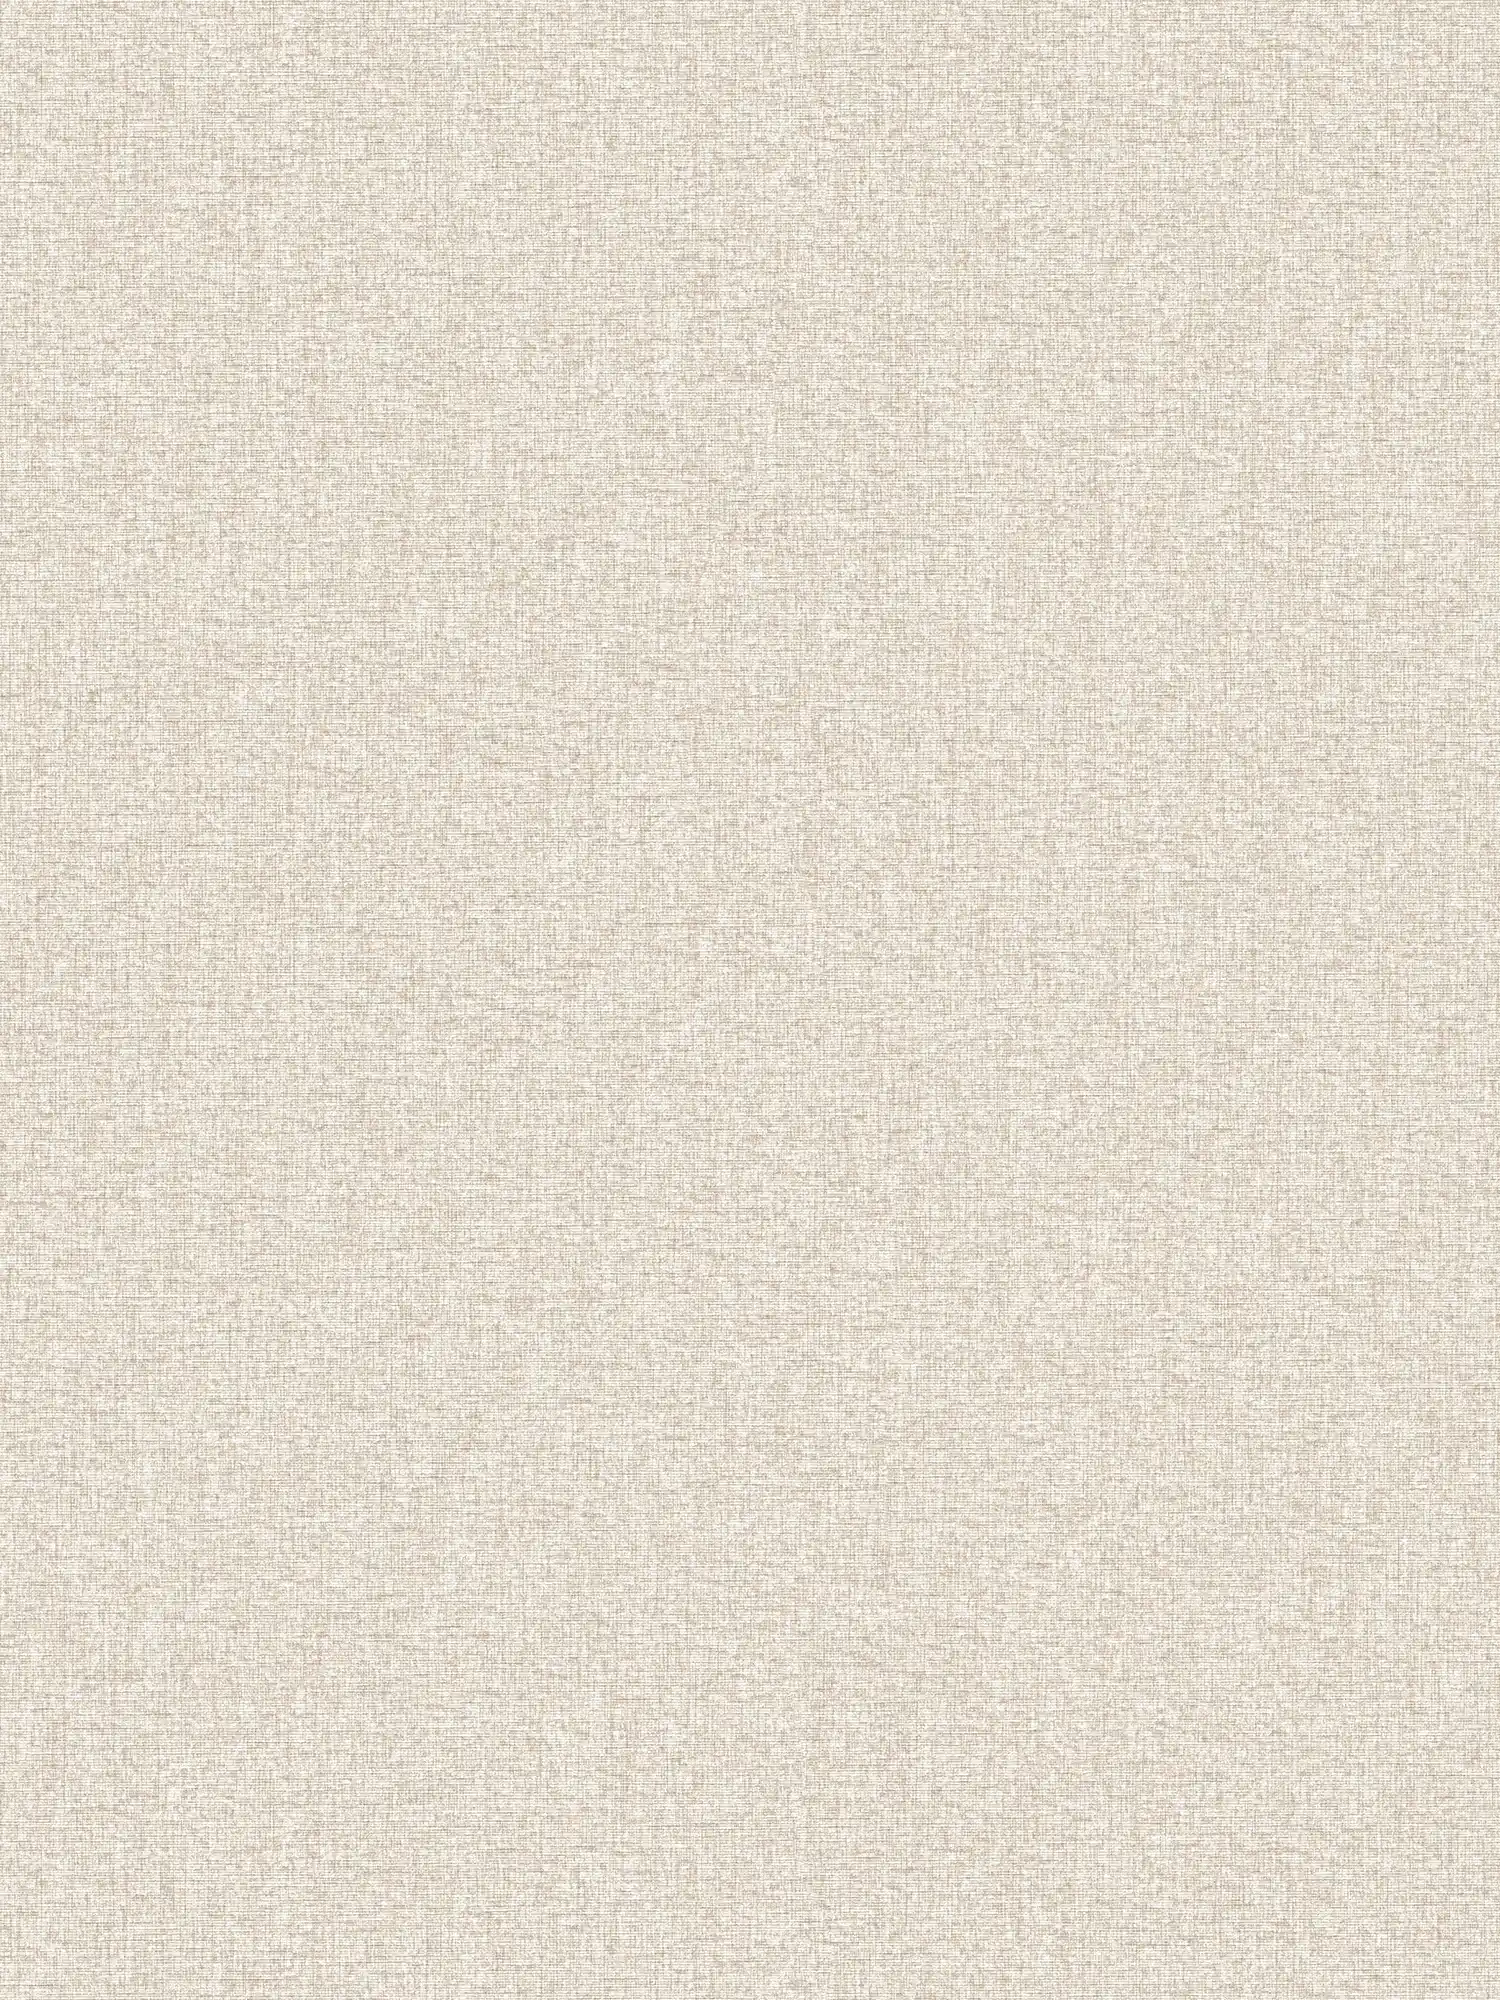 Carta da parati non tessuta a tinta unita con struttura leggera, opaca - taupe, beige, grigio
